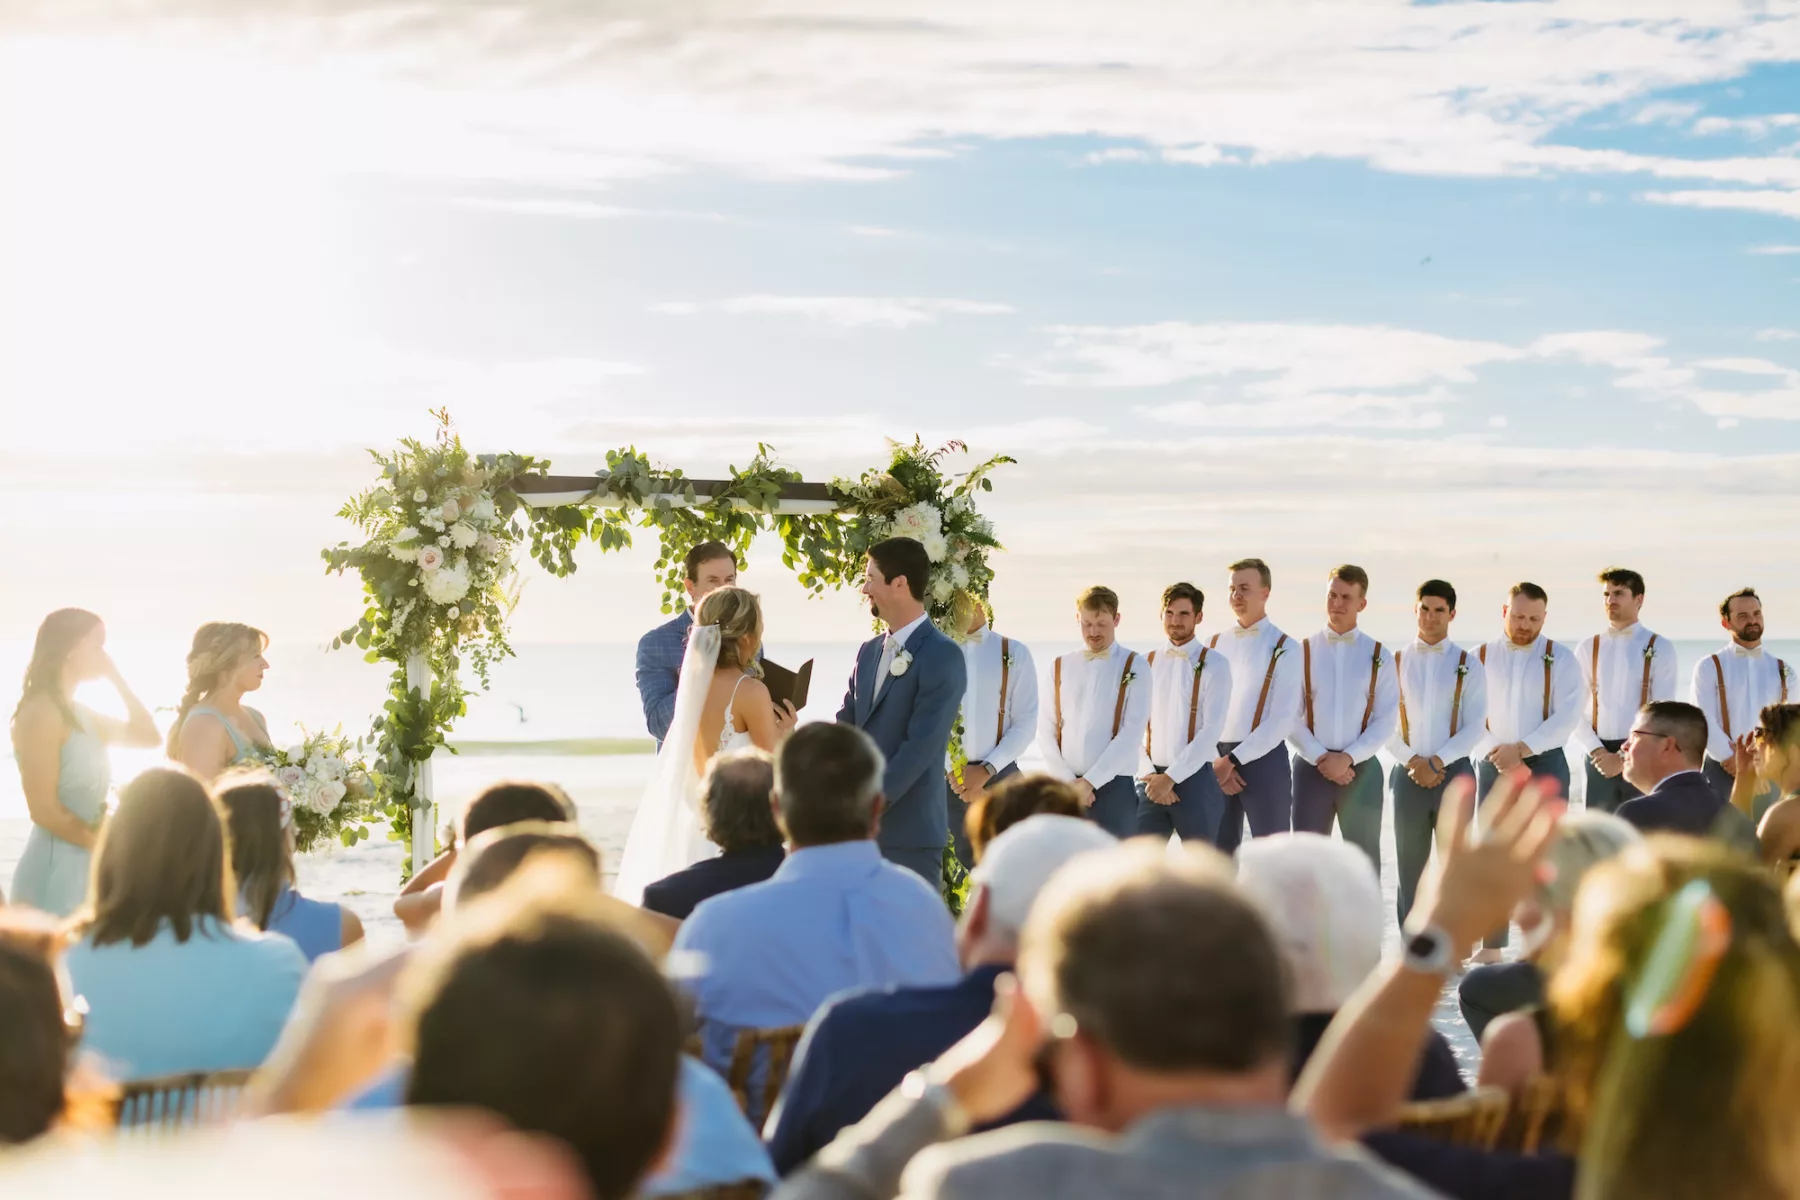 Fall Boho Madeira Beach Sunset Wedding Ceremony Inspiration | Tampa Bay Photographer Amber McWhorter Photography